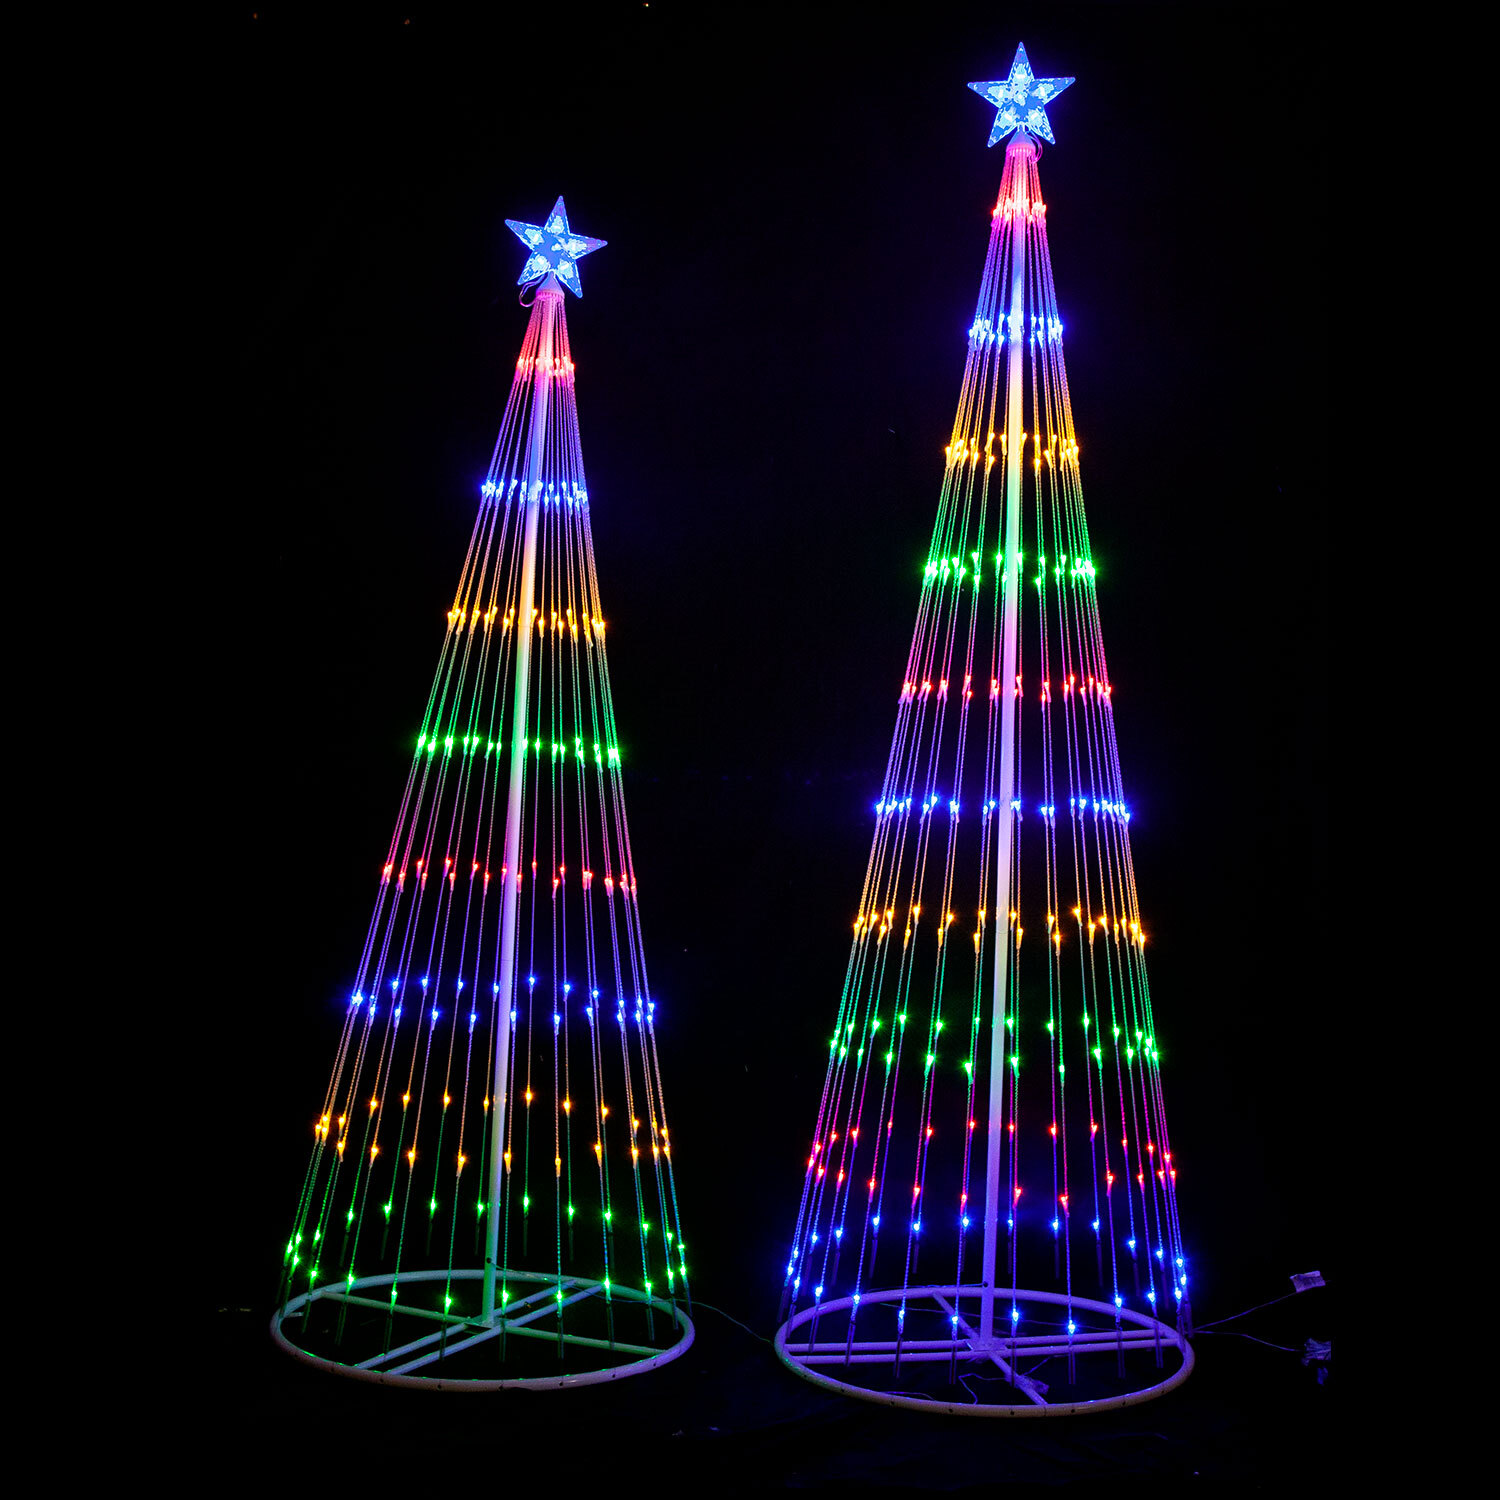 Circling LED Light Cone Shape Christmas Tree with Lighting Star